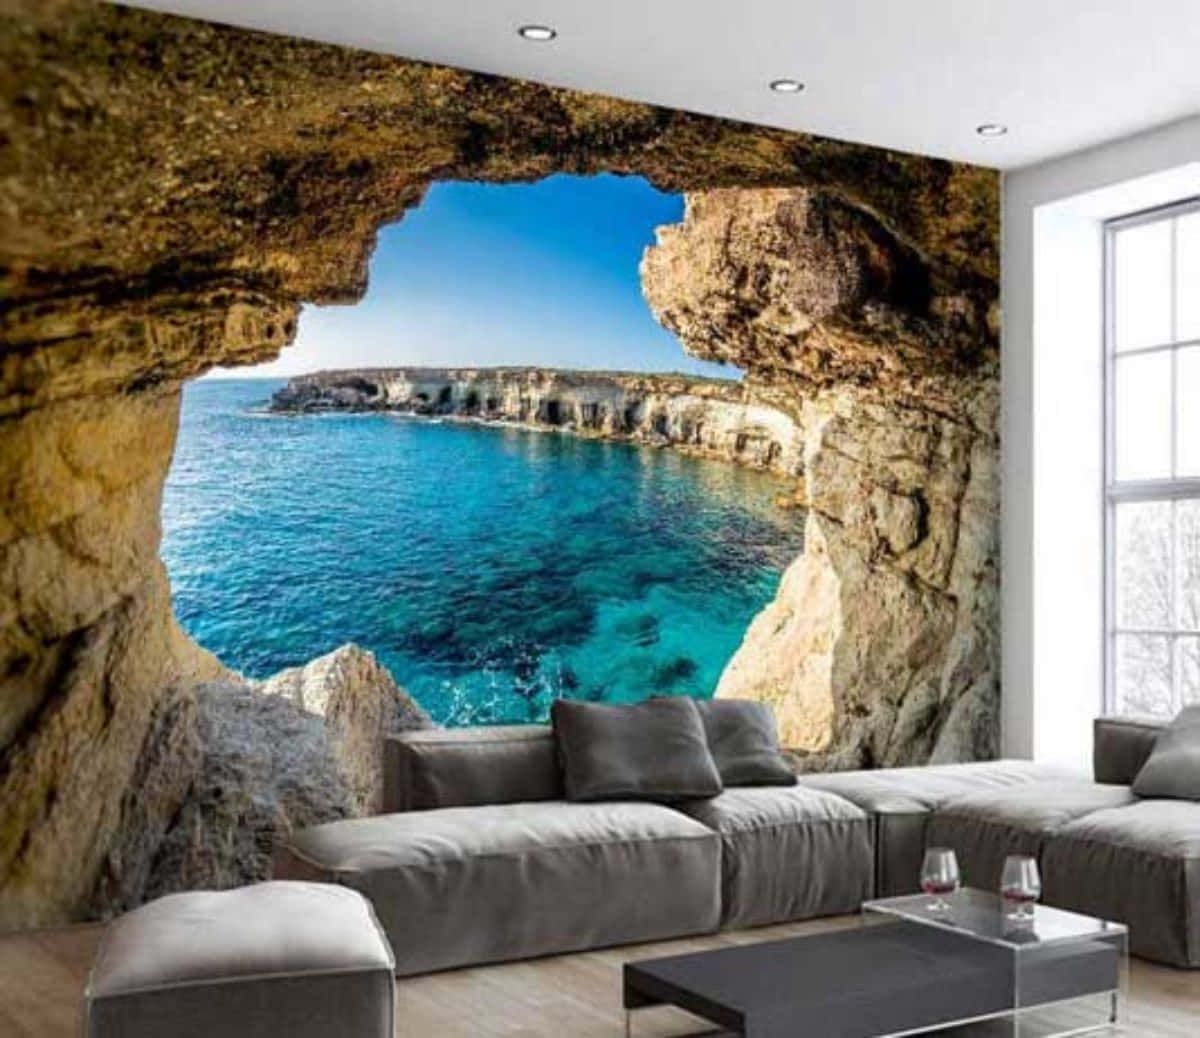 Phenomenal Scenery In Living Room Wallpaper